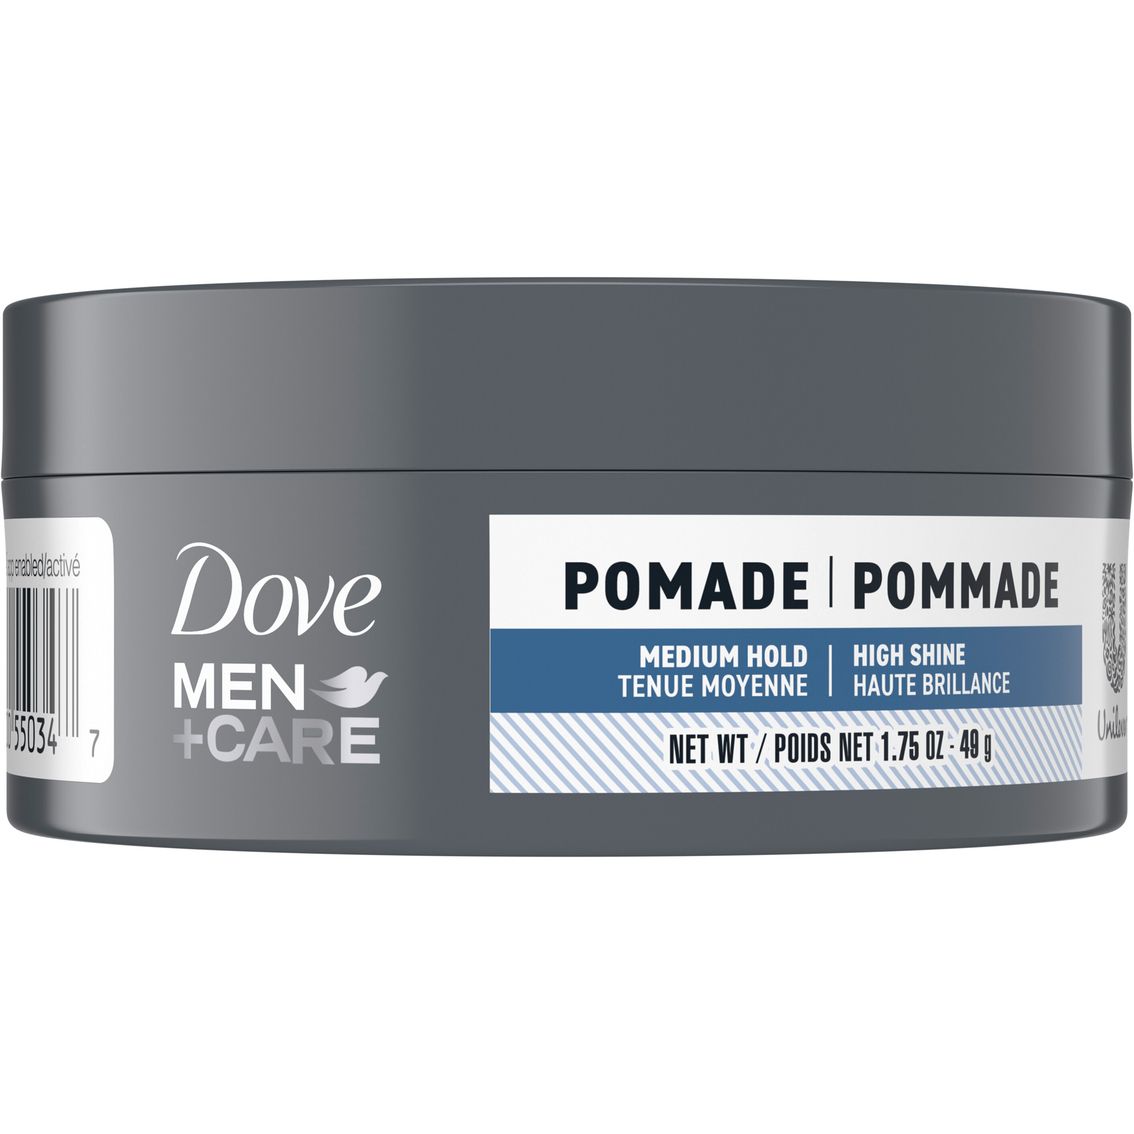 Dove Men + Care Defining Pomade Sleek Hold 1.75 oz.